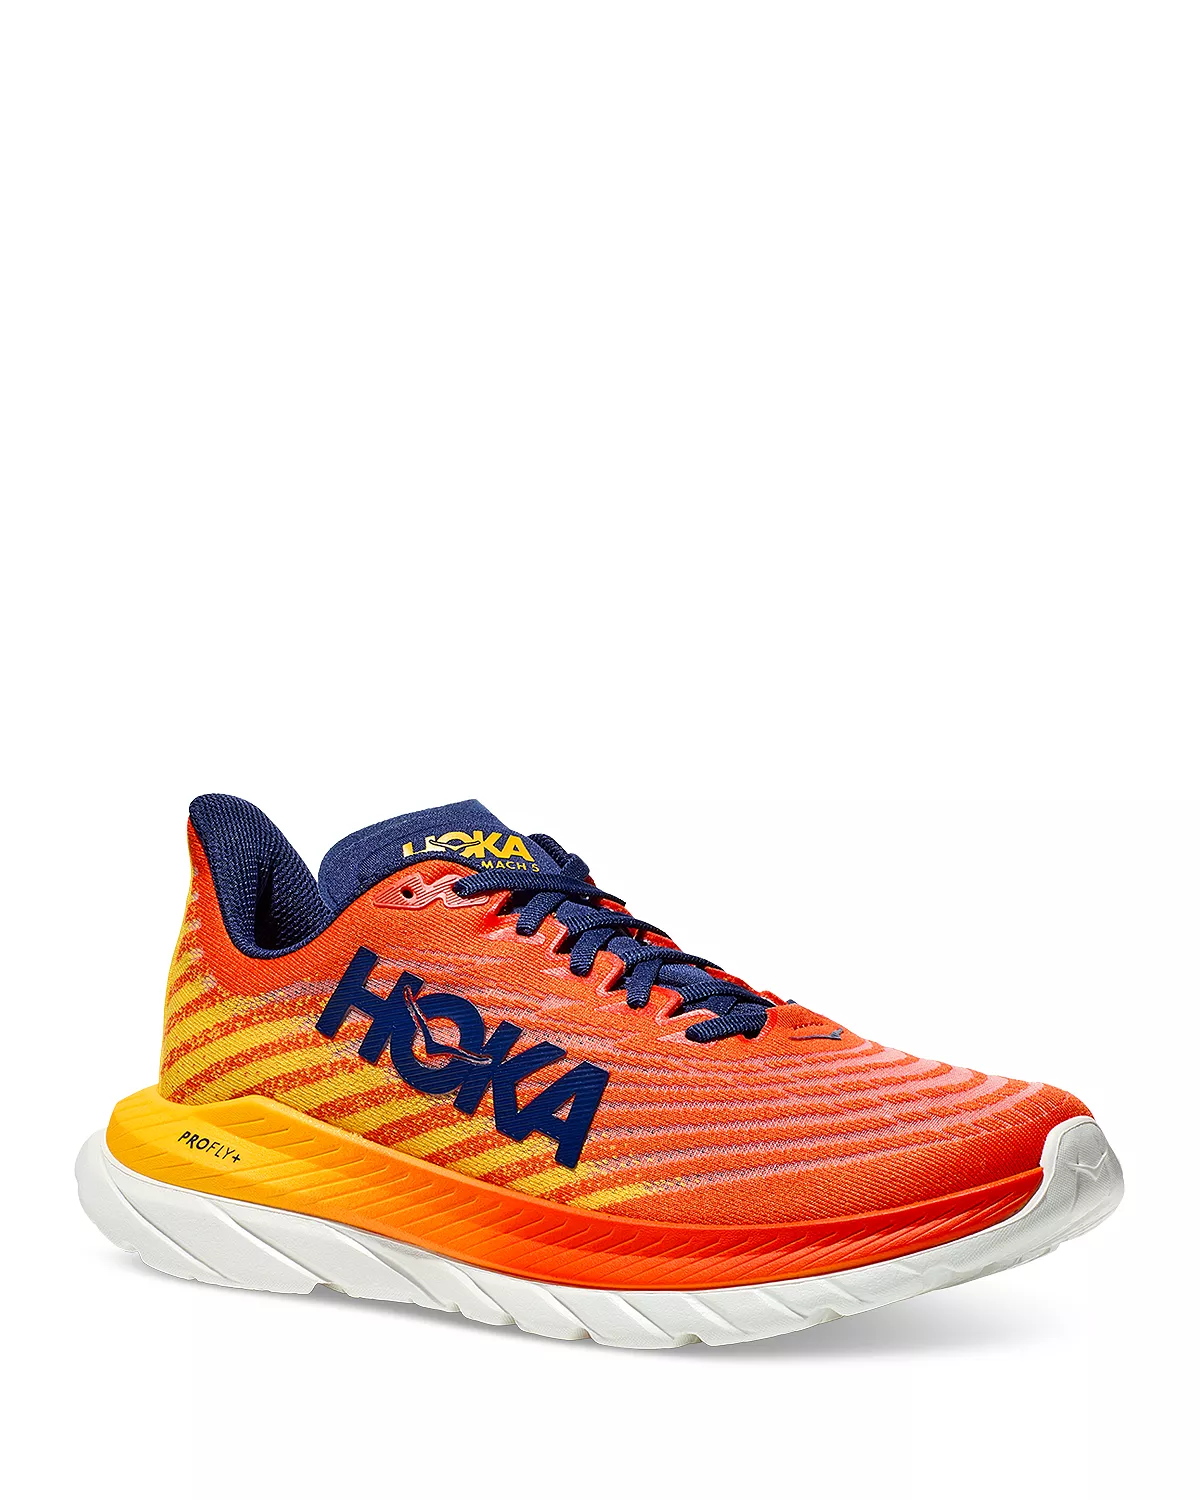 HOKA Men's Mach 5 Low Top Running Sneakers